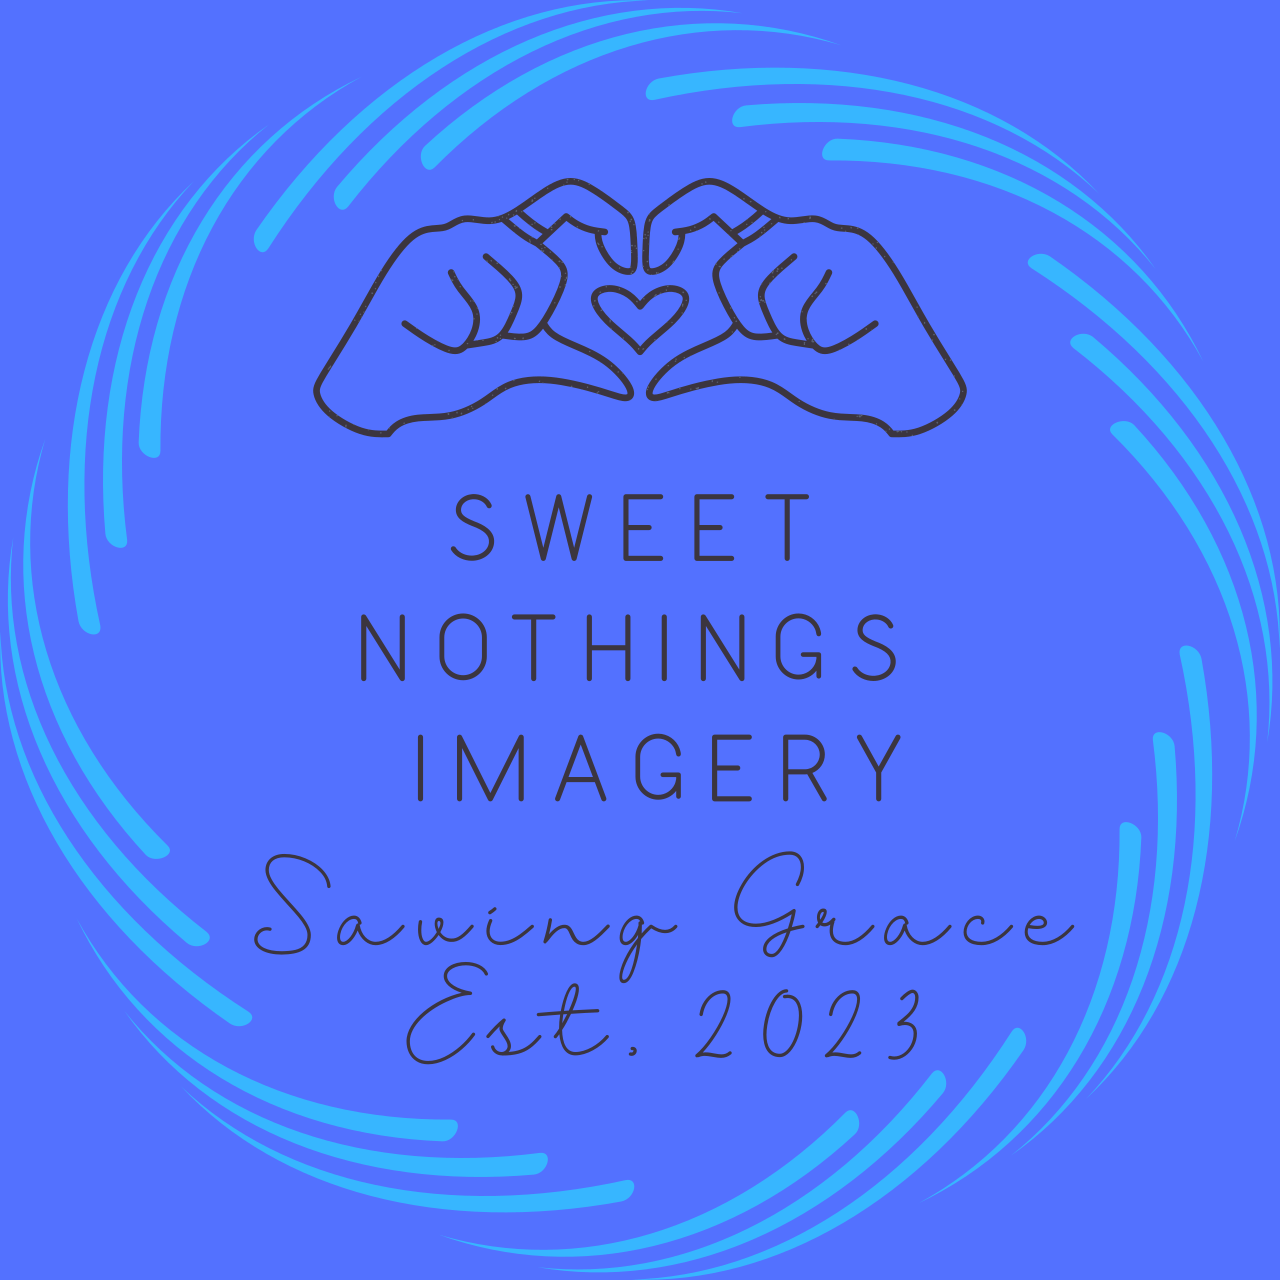 Sweet 
Nothings 
Imagery's logo